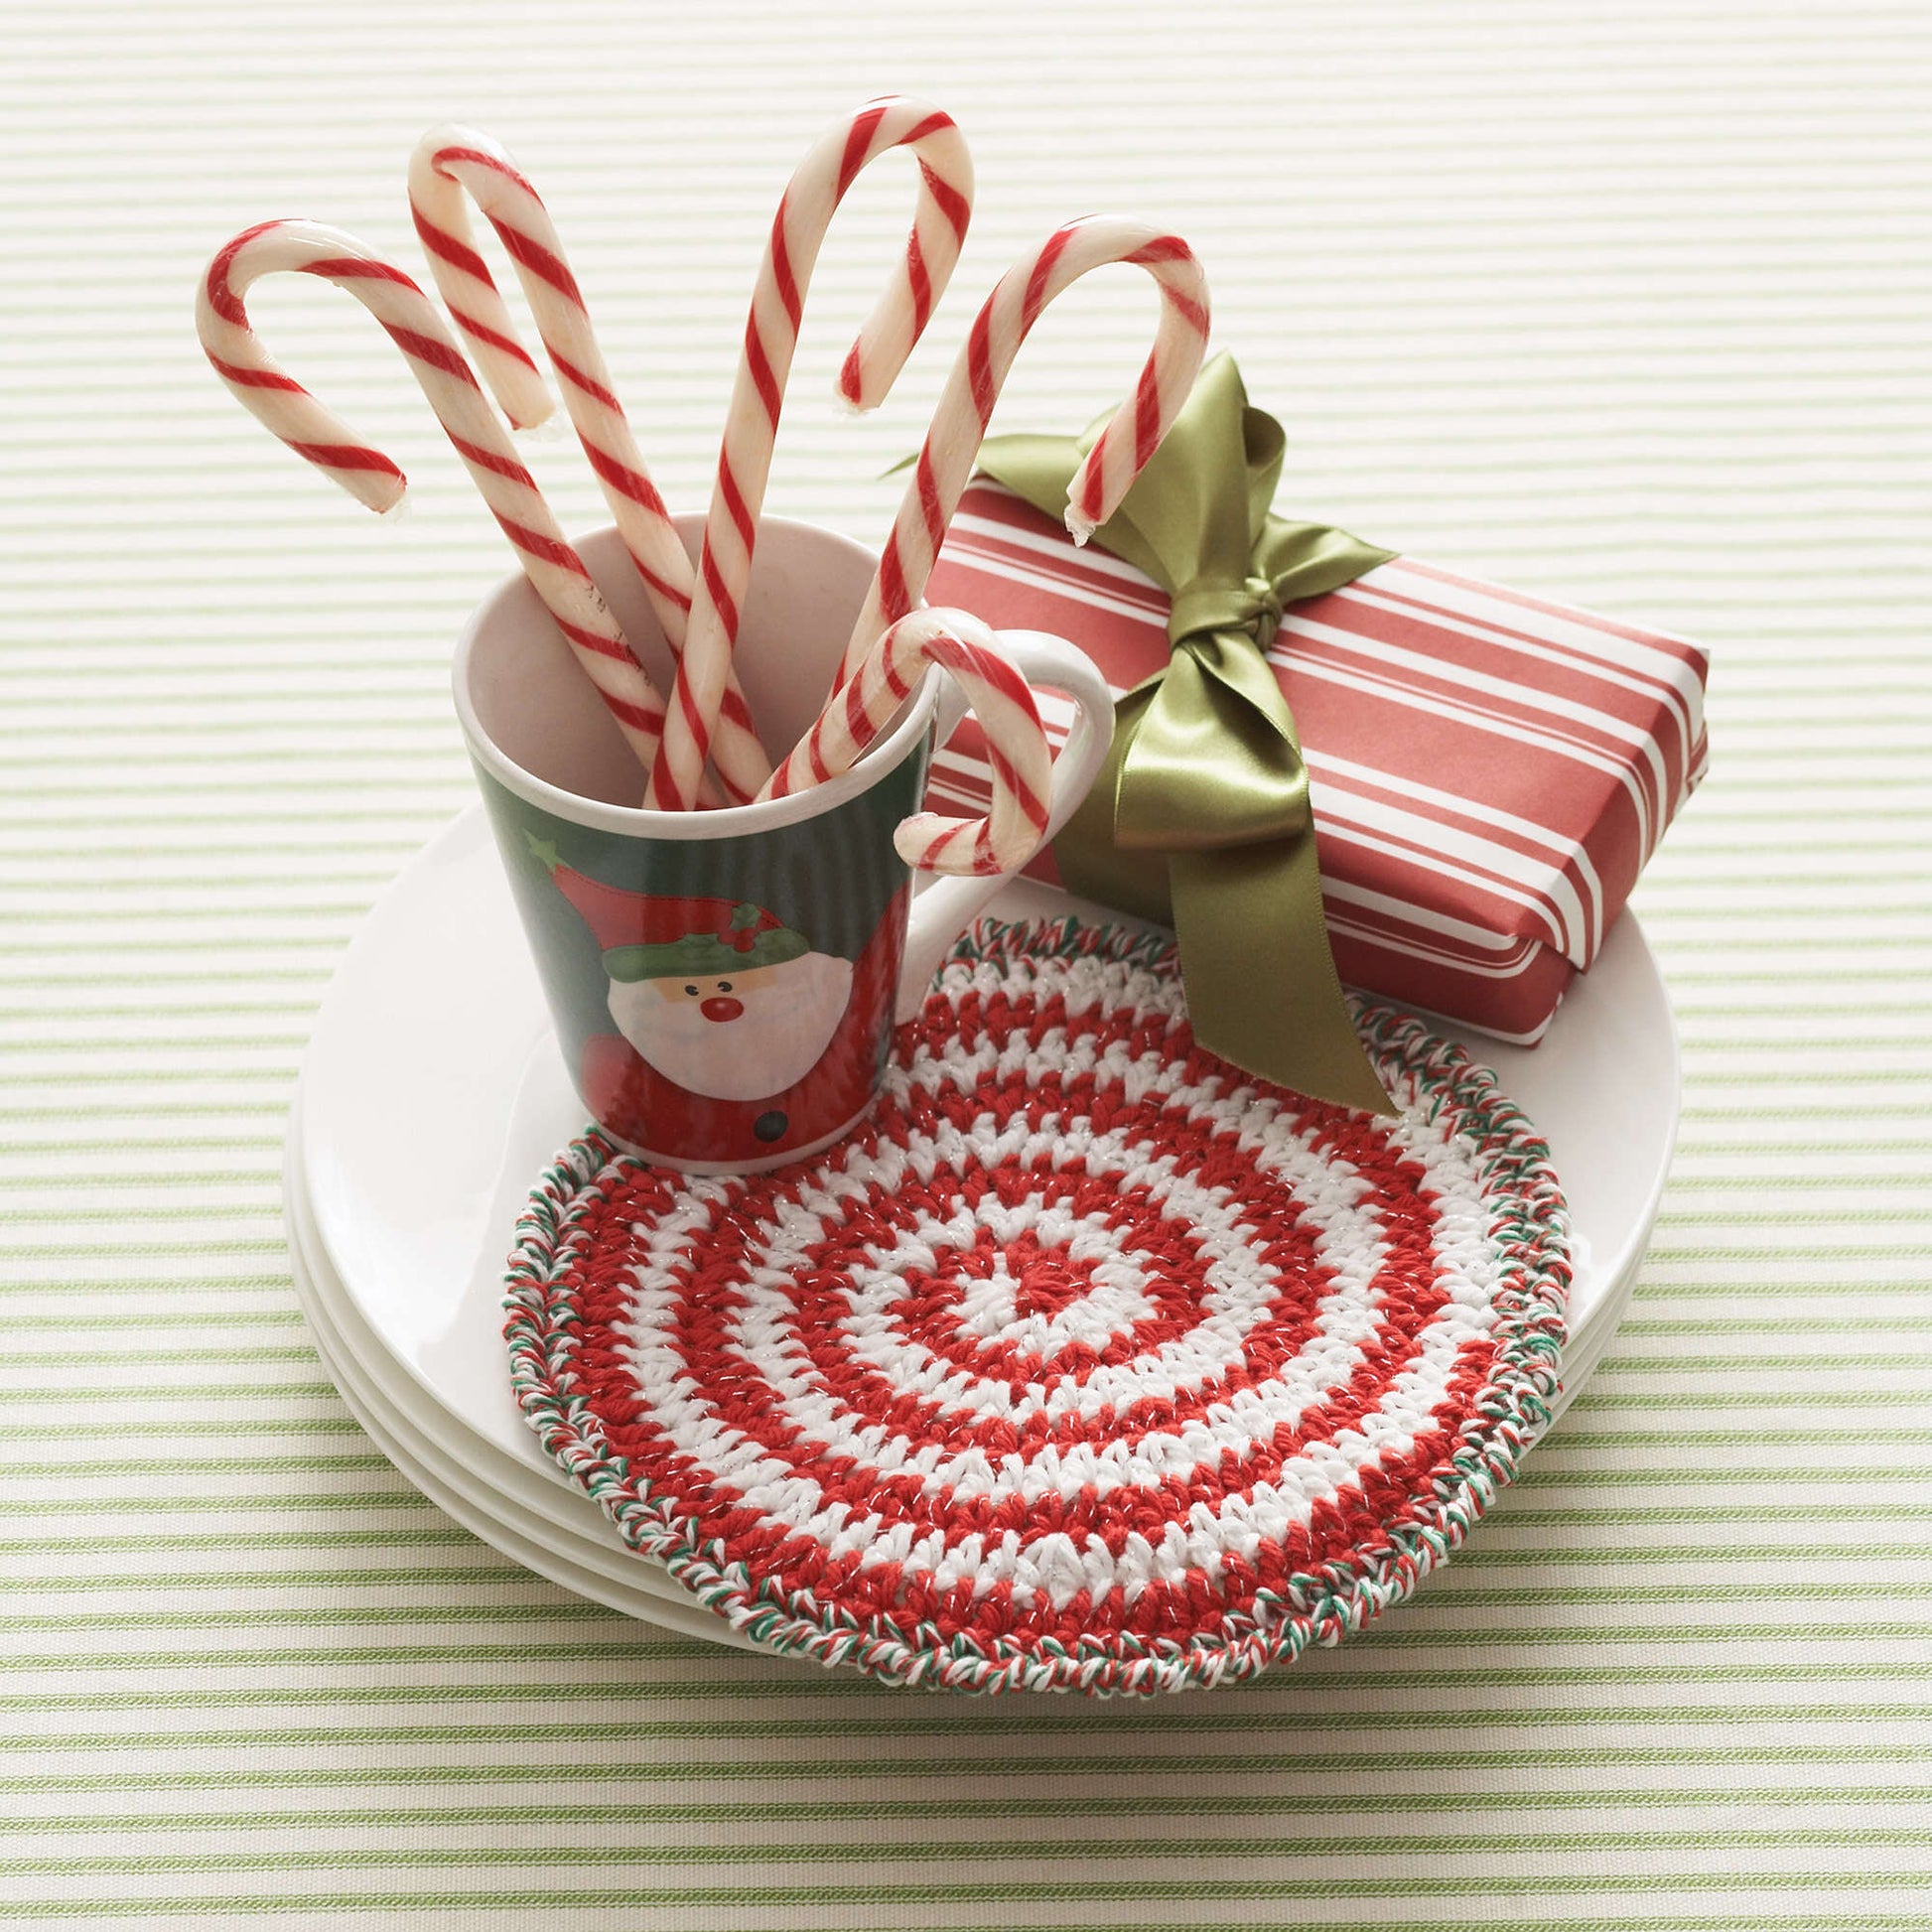 Bernat Candy Swirl Hotpad Crochet Holiday made in Bernat Handicrafter Cotton yarn